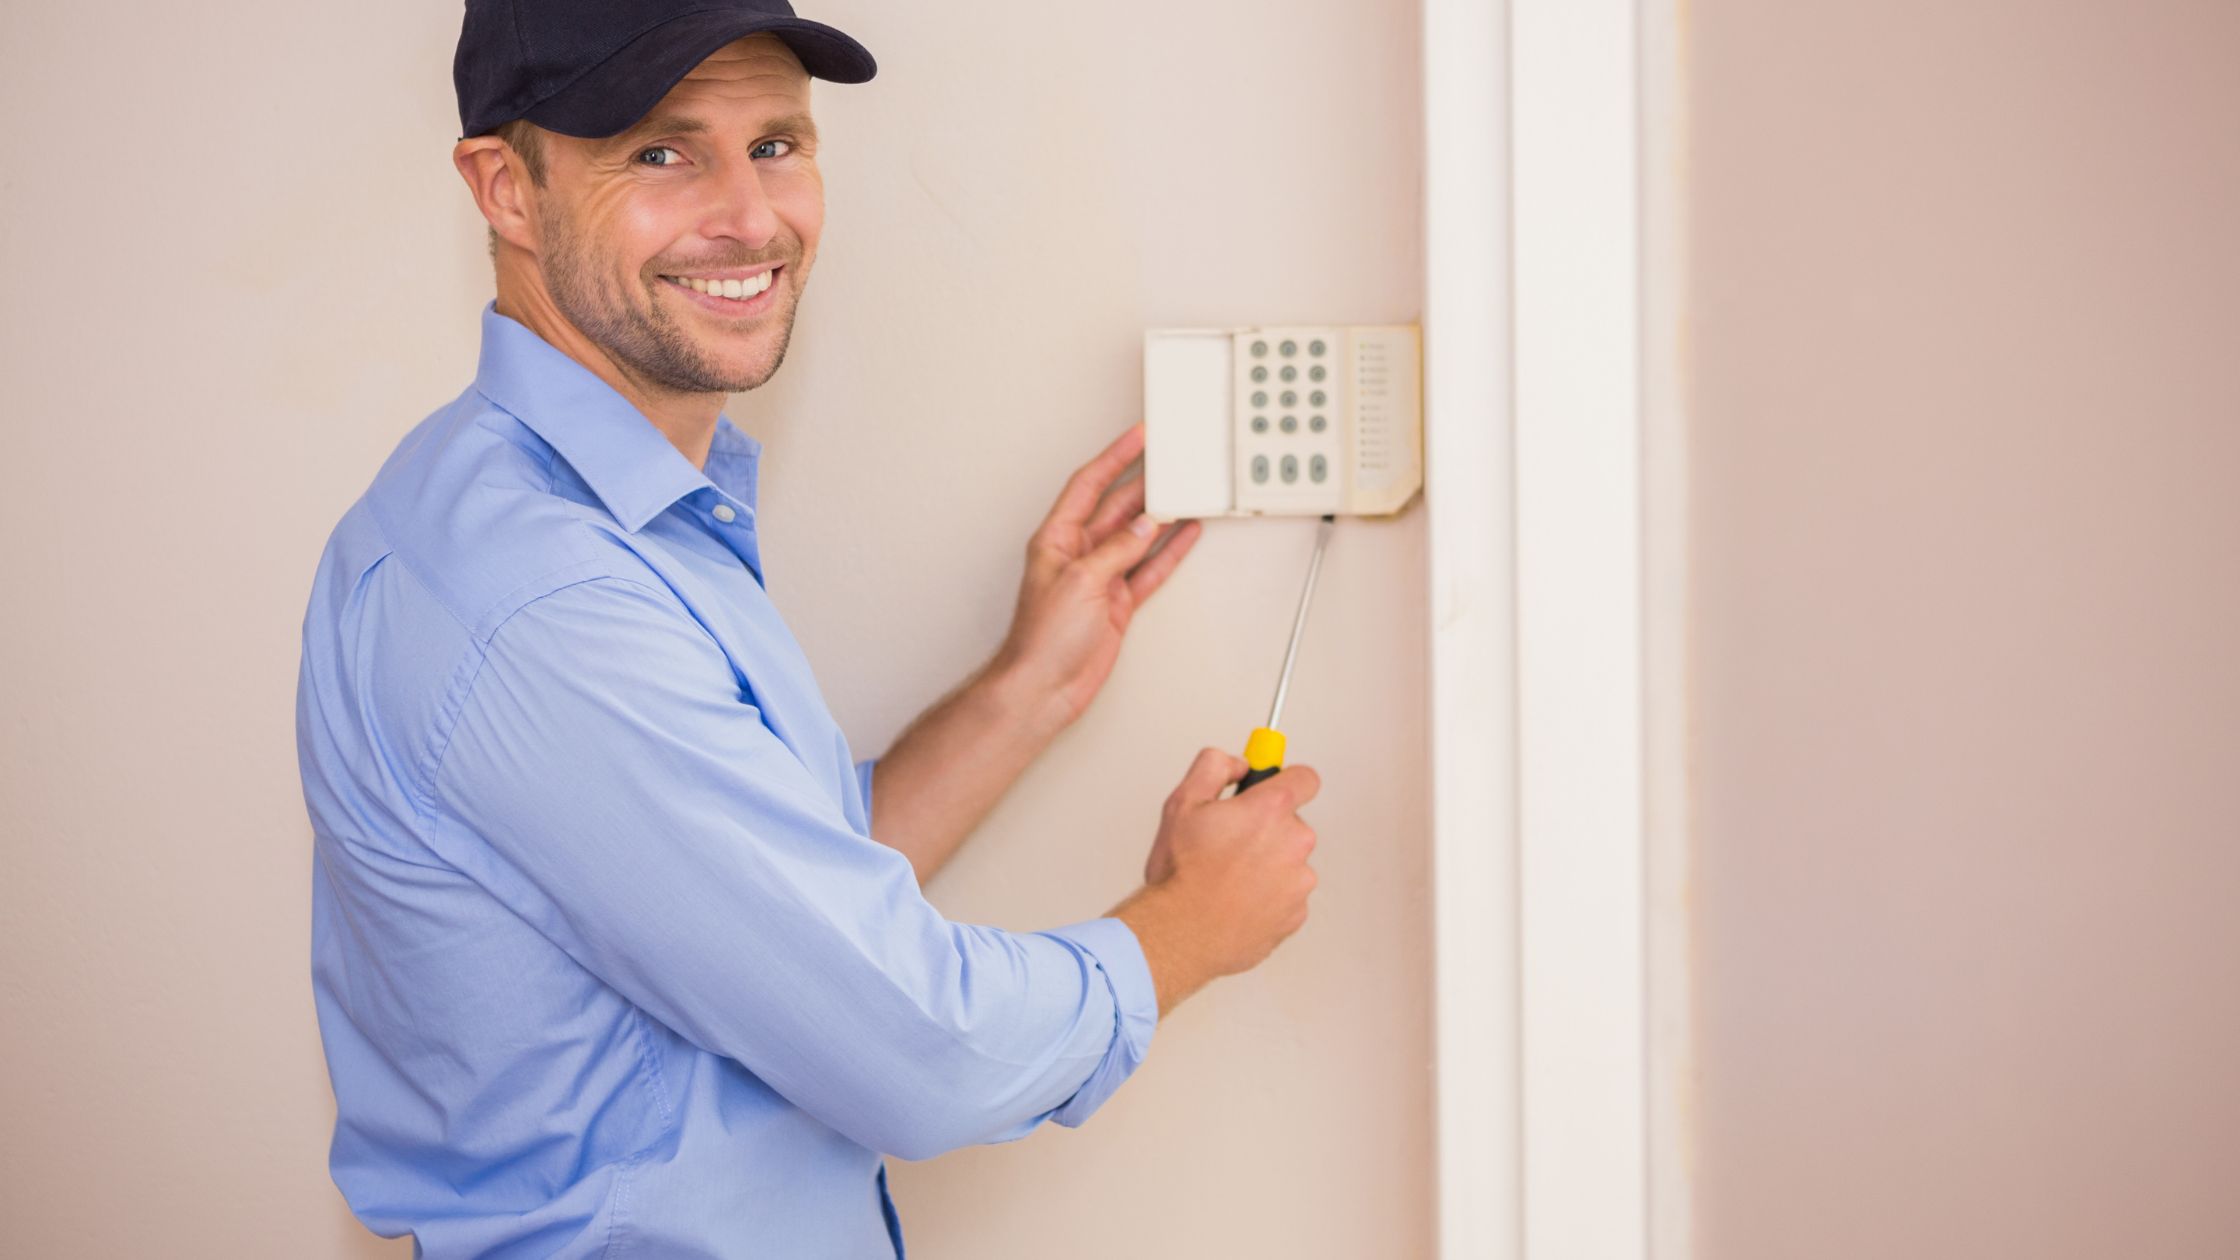 Smiling Handyman Fixing An House Alarm System